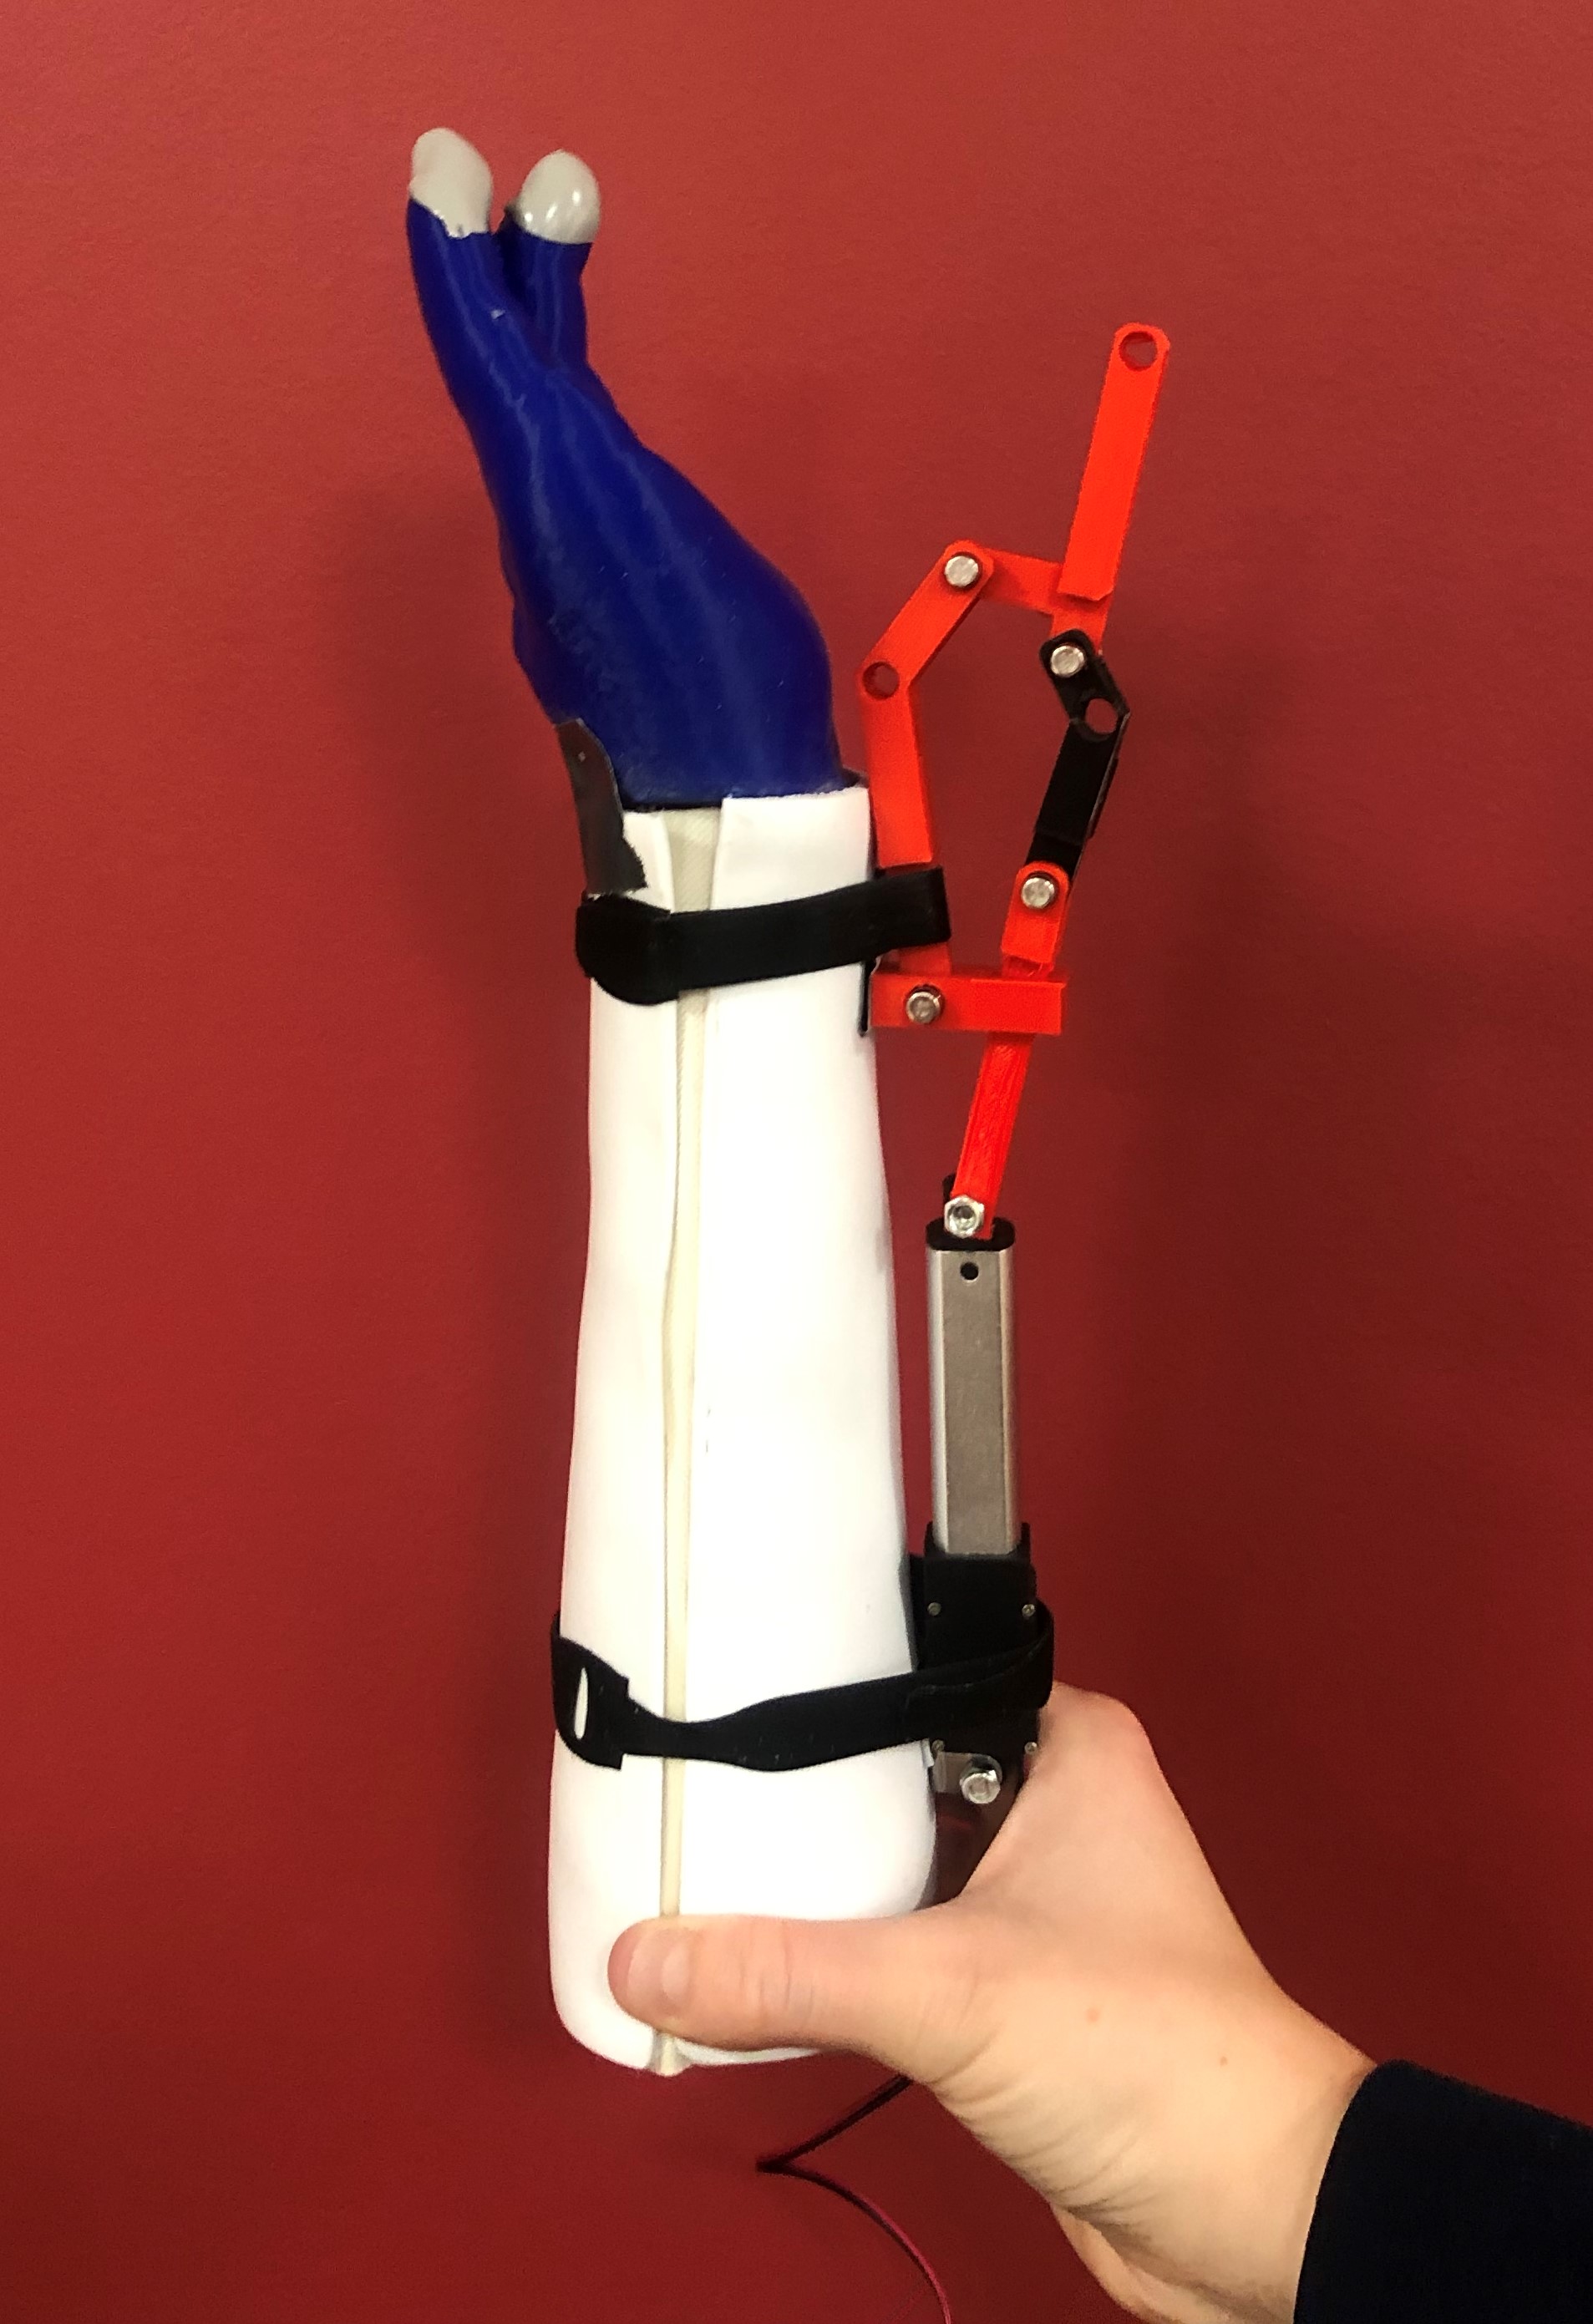 The final working prosthetic prototype